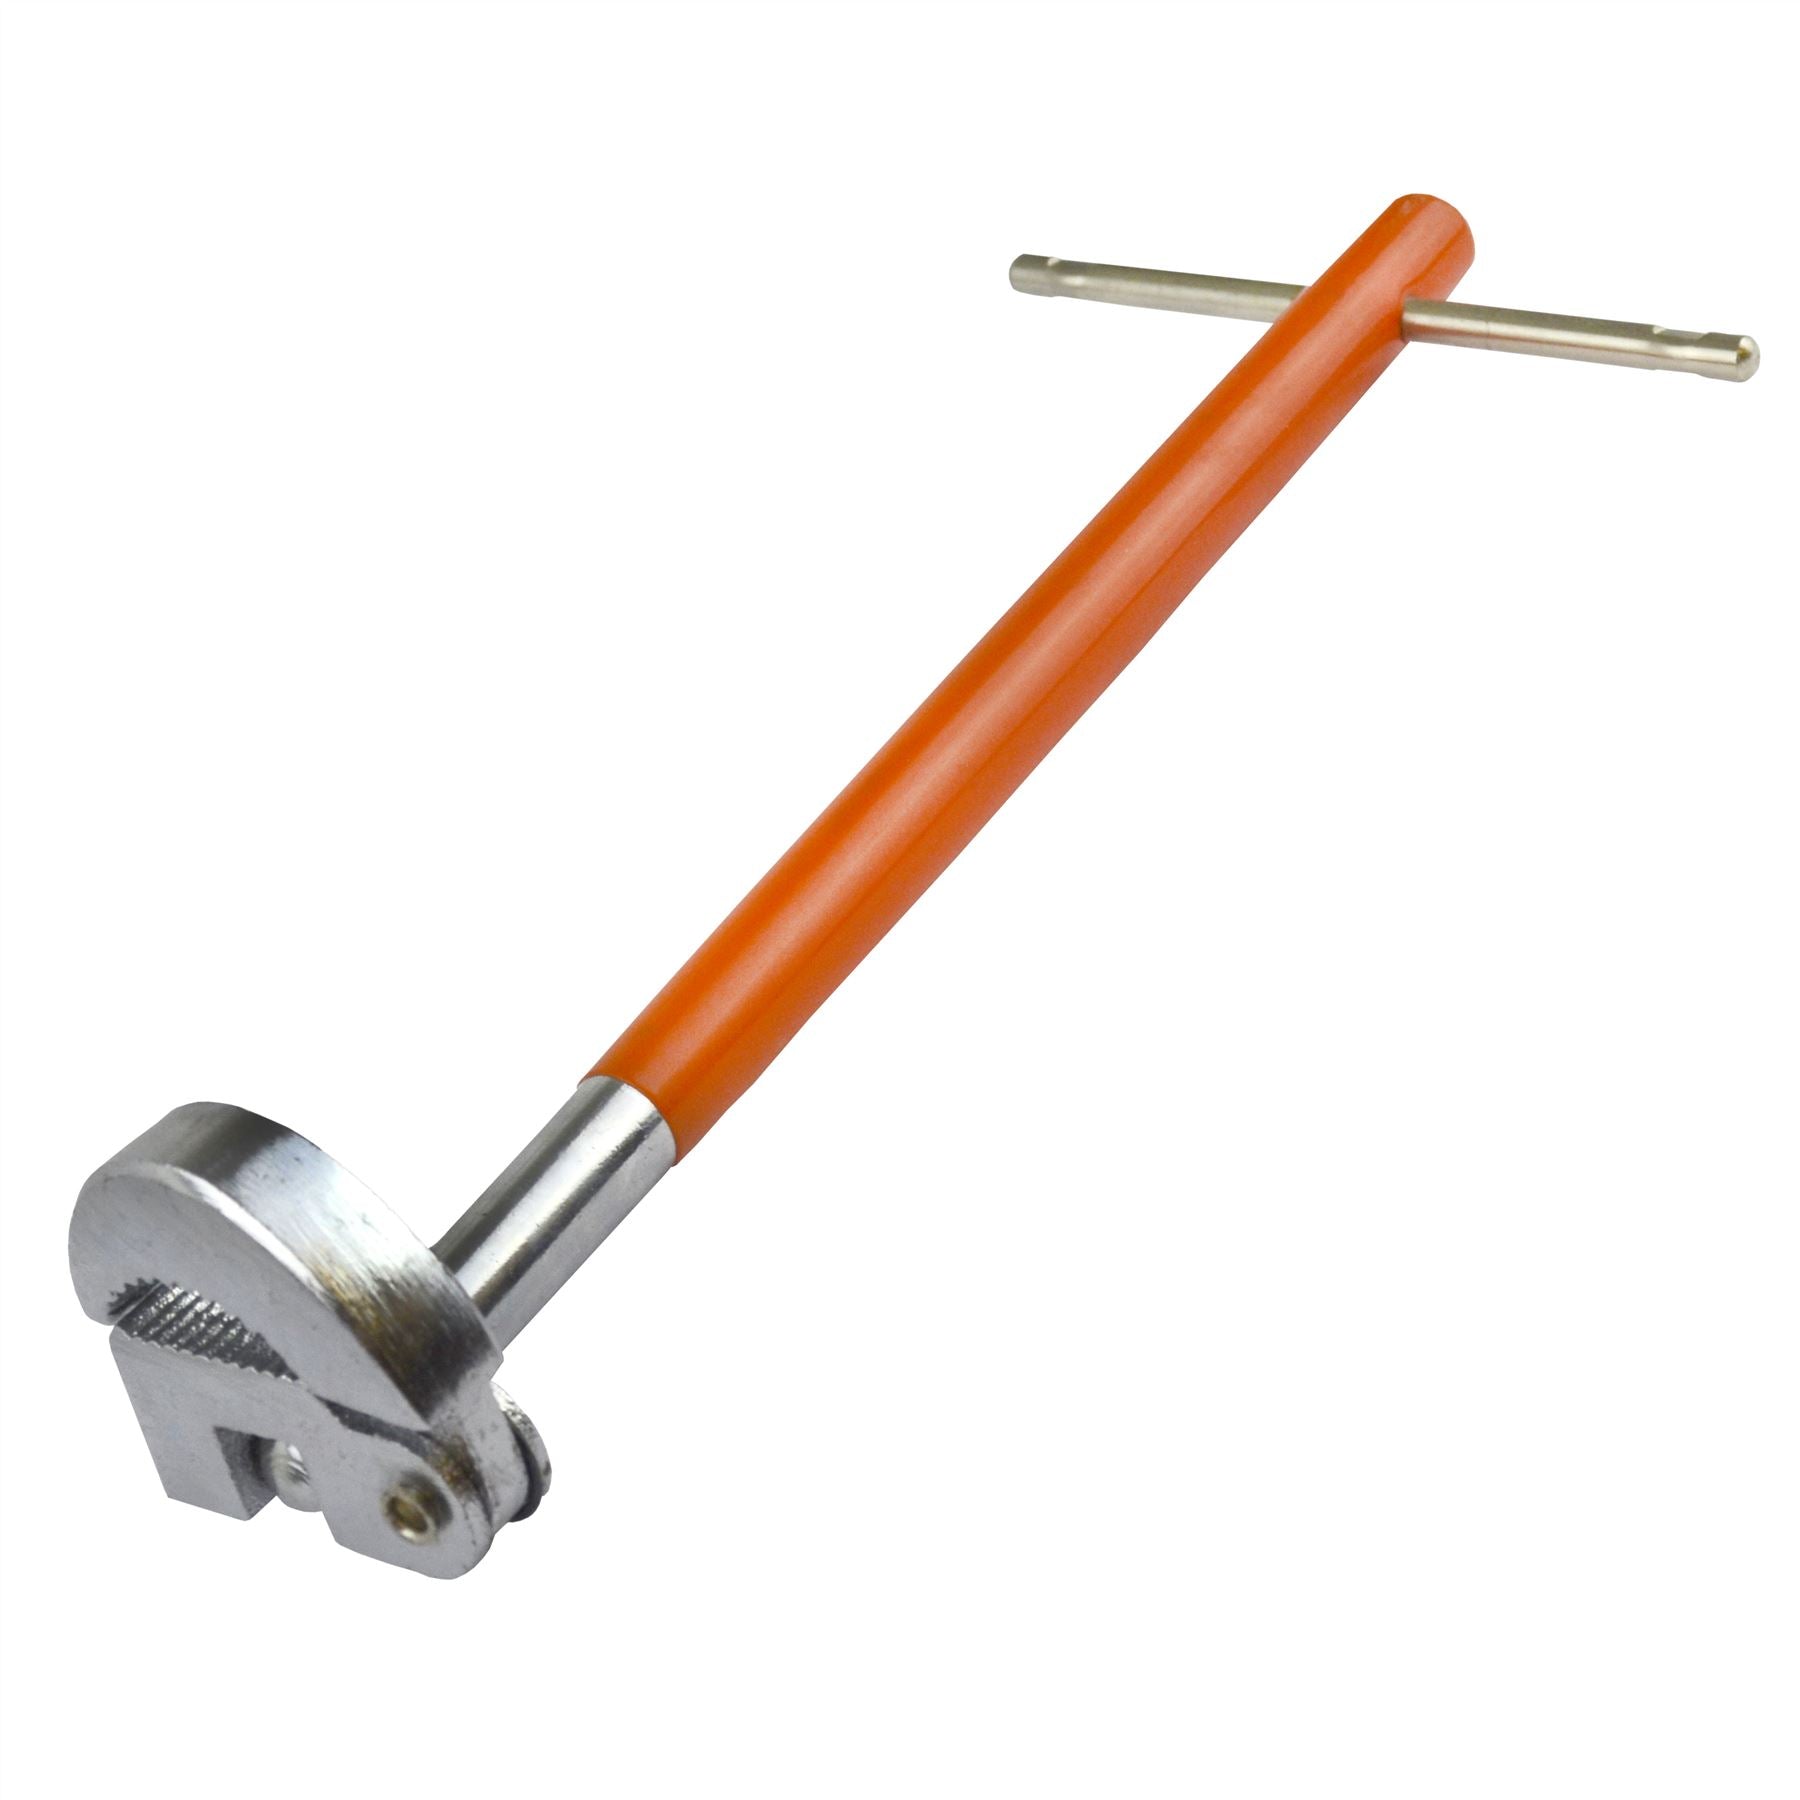 11" Adjustable Basin Wrench Sink Bath Tap Spanner Plumbing / Plumbers Tool